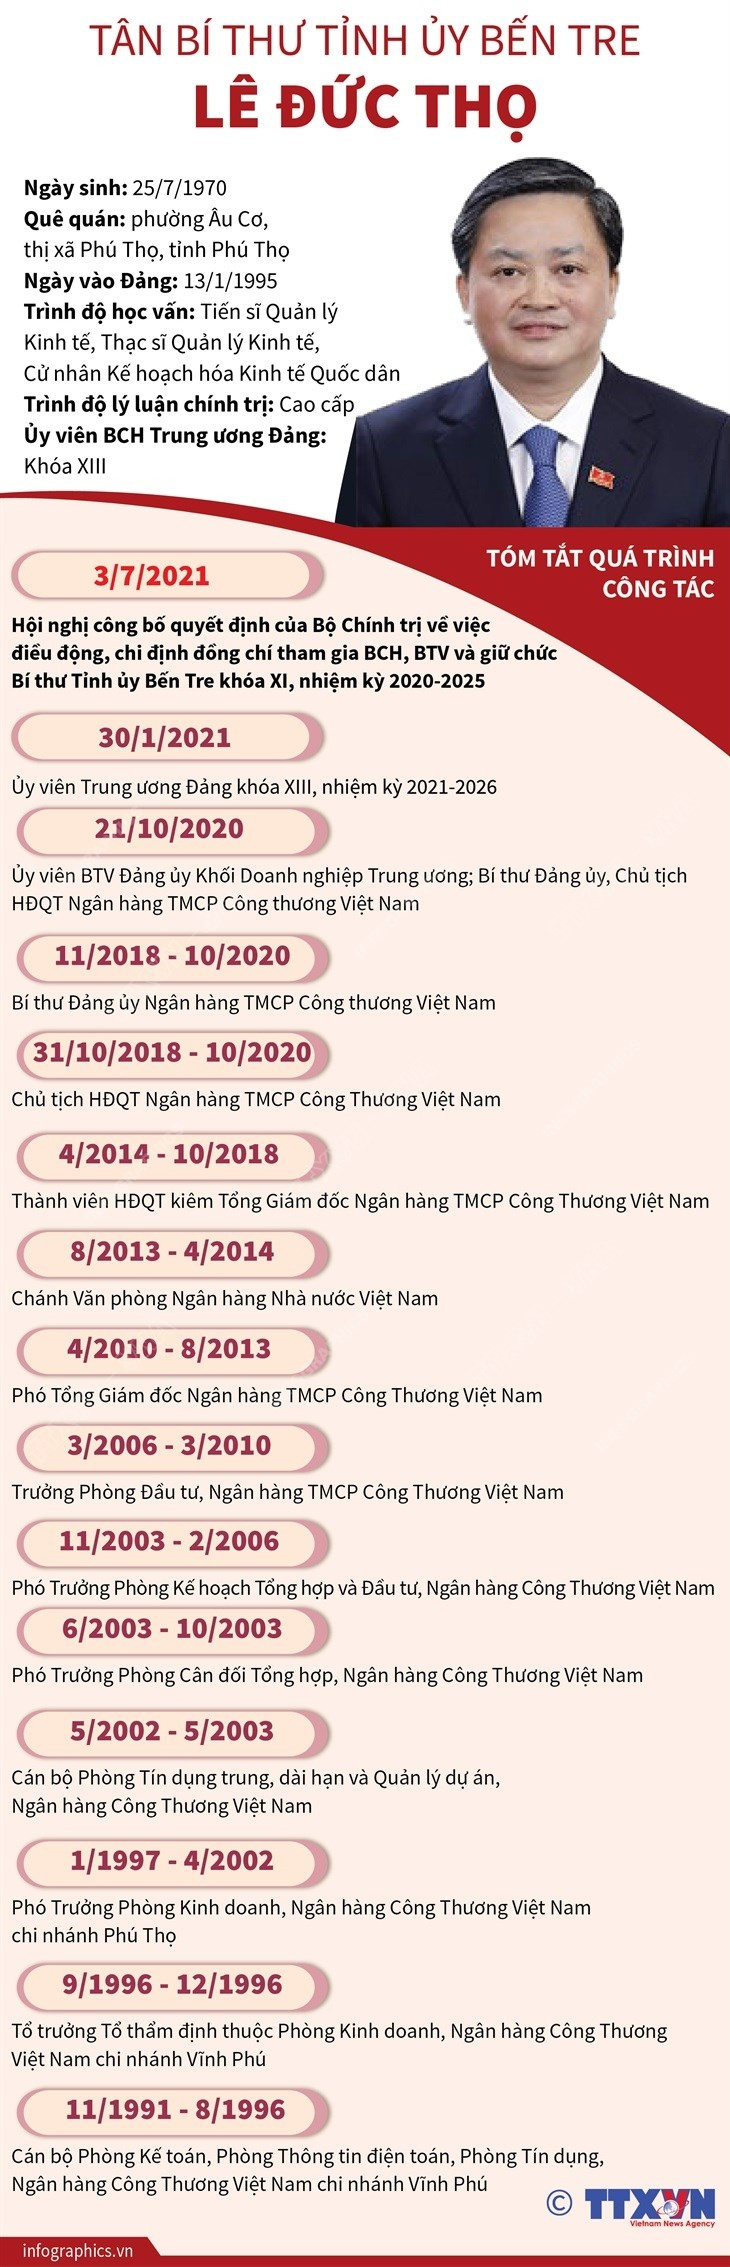 [Infographics] Ong Le Duc Tho - tan Bi thu Tinh uy Ben Tre hinh anh 1